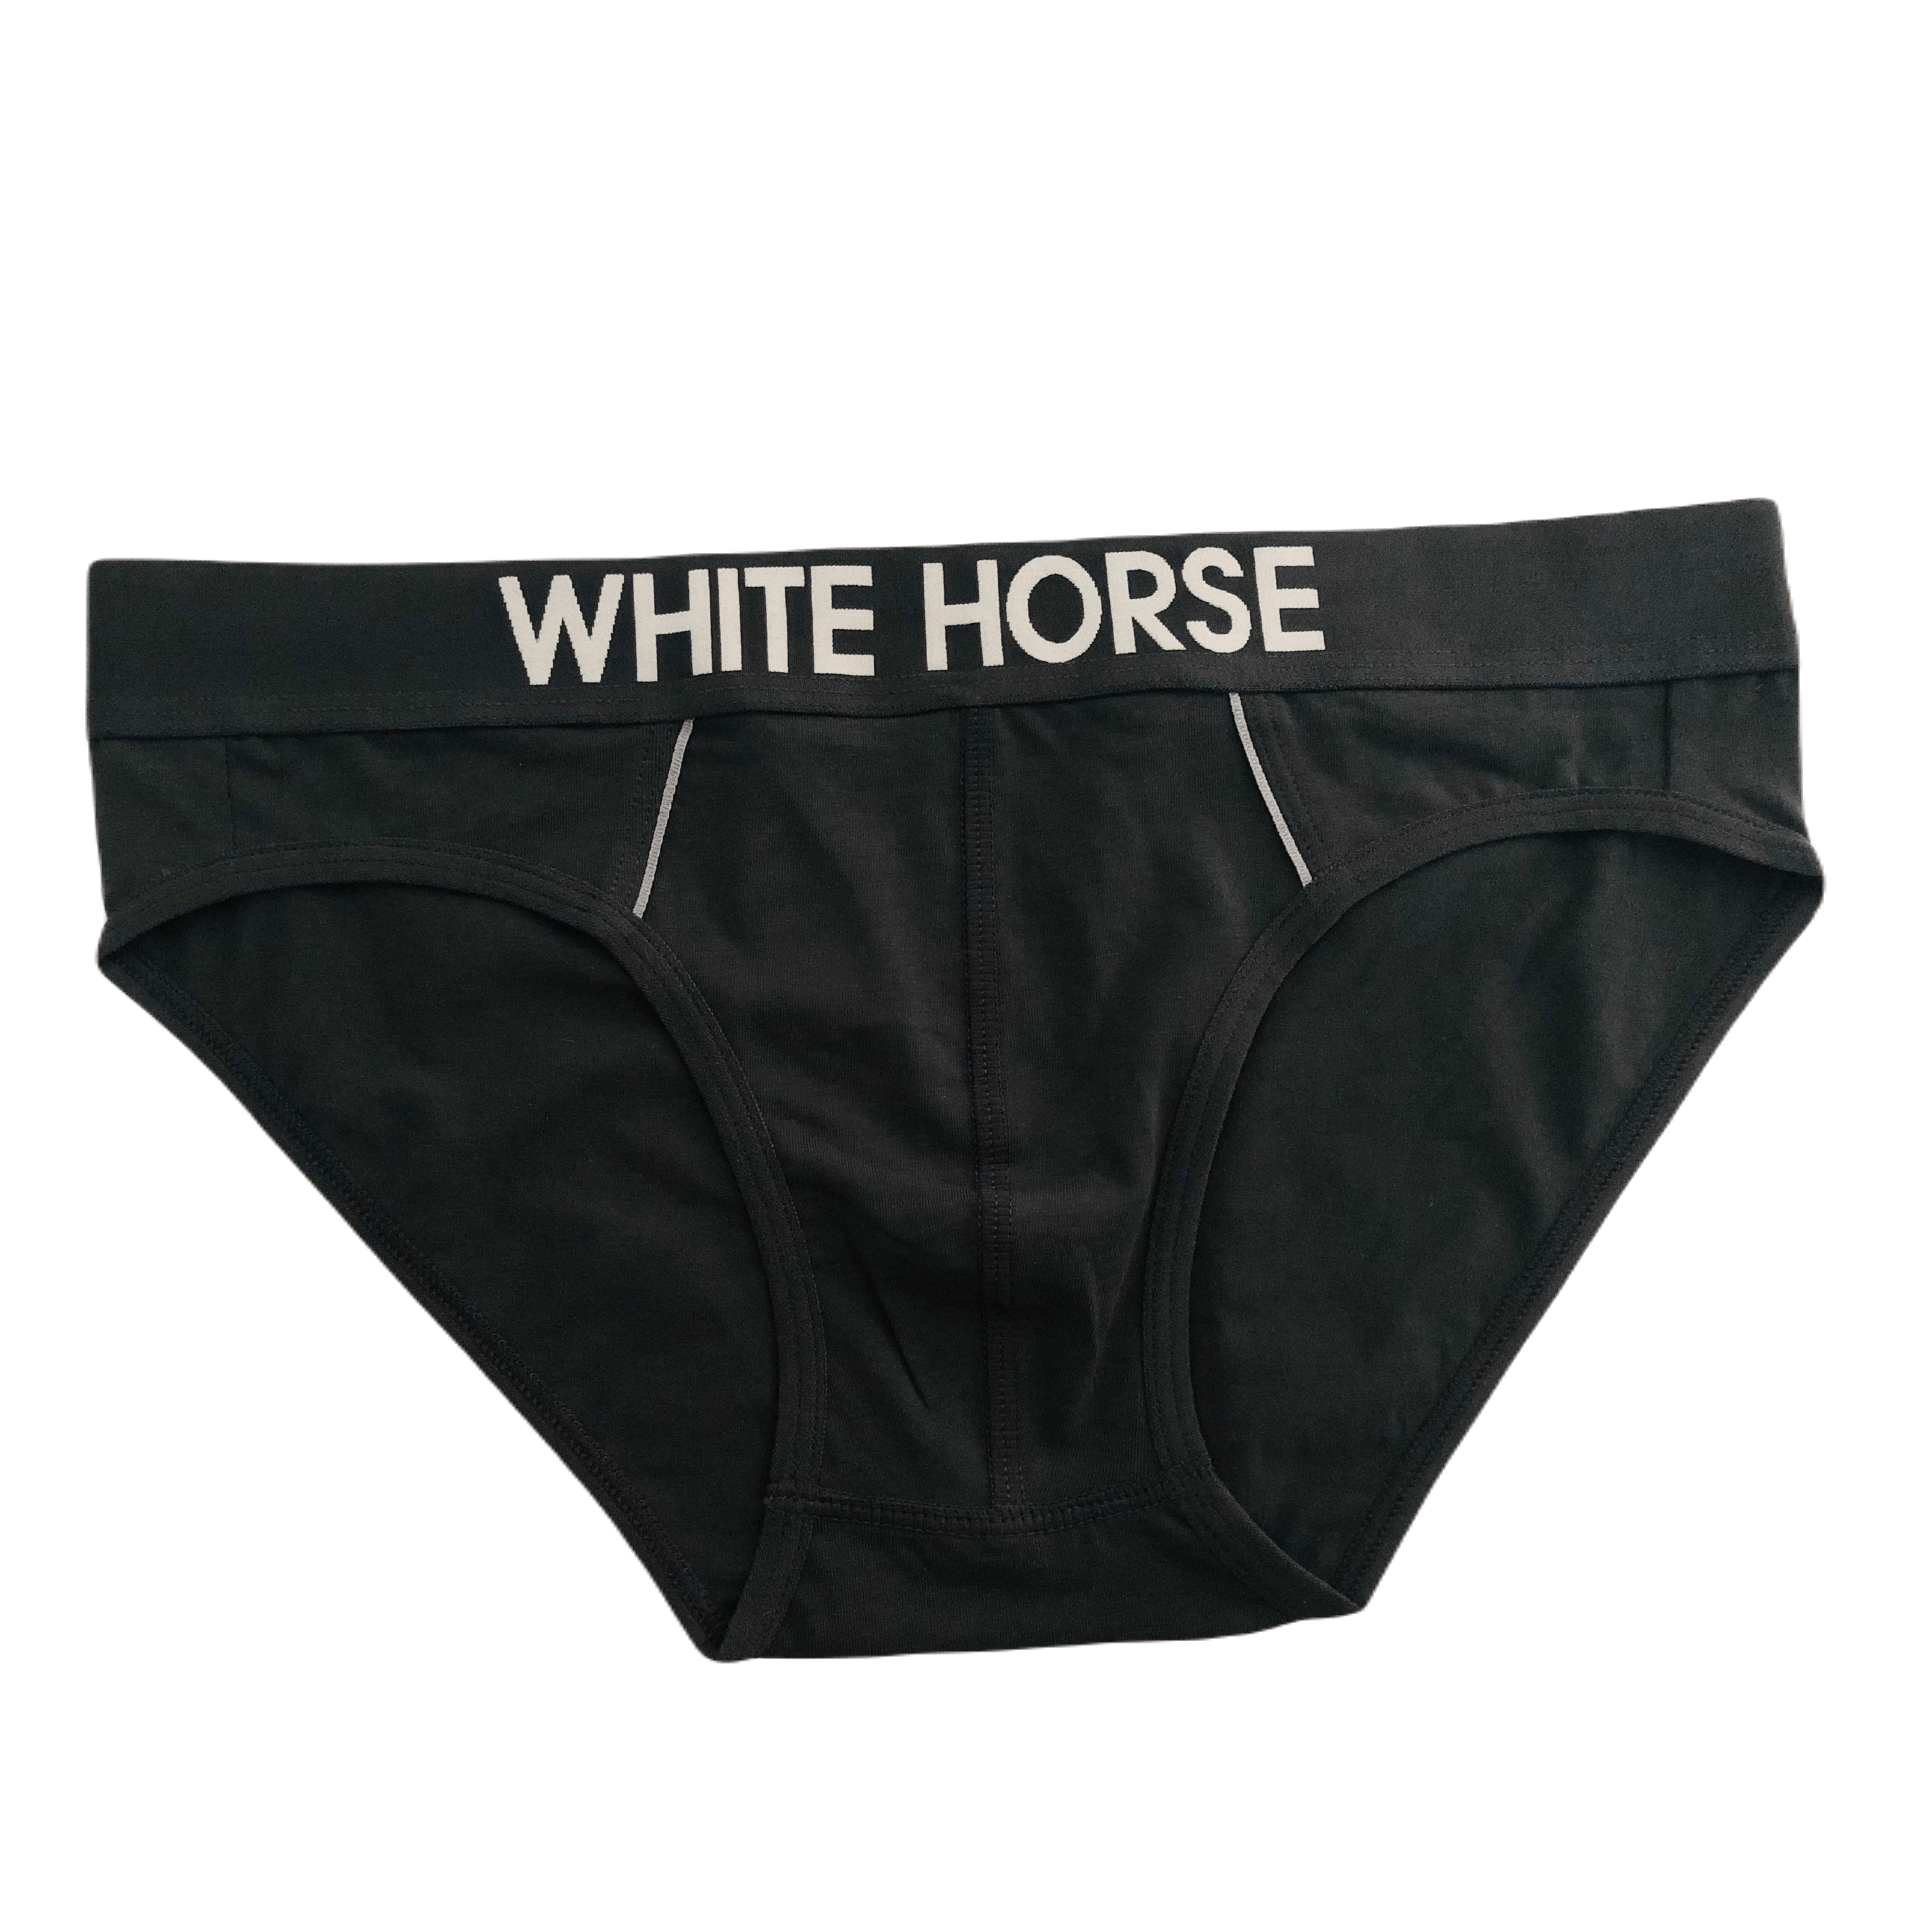 mochanstore.com QUAN LOT NAM BRIEF WH020 WHITE HORSE